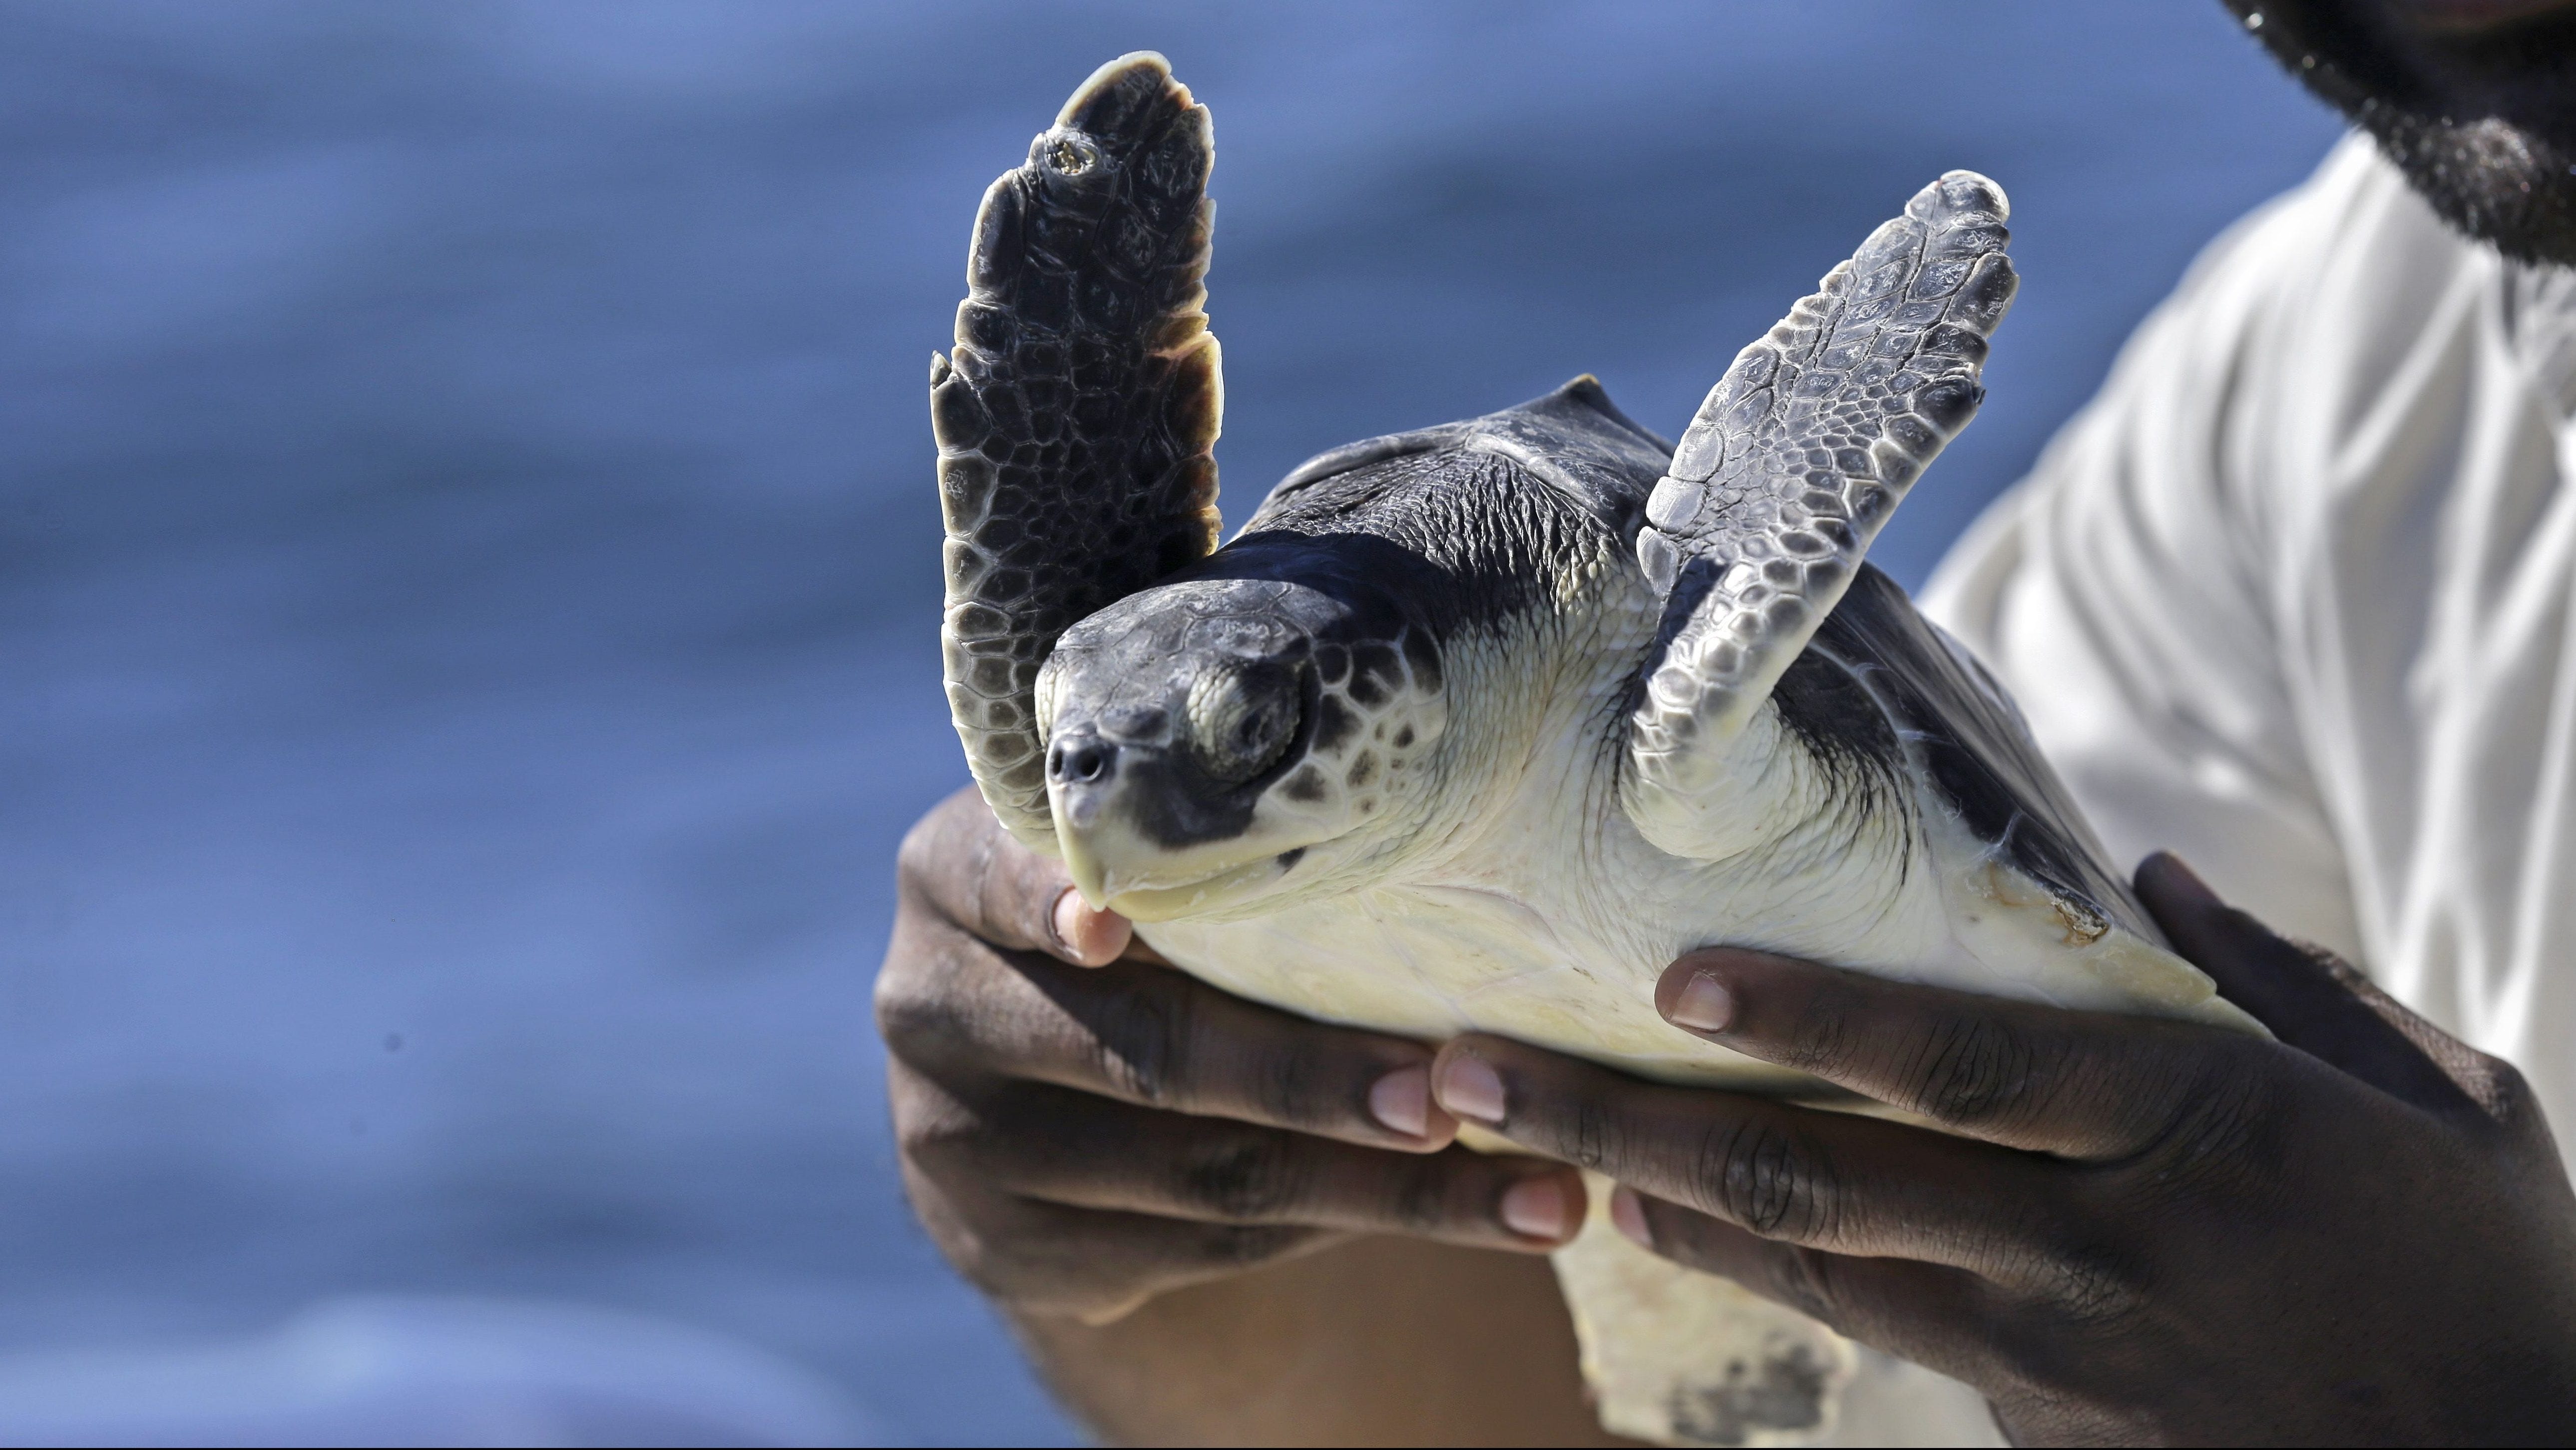 A market for tiny turtles triggered an international criminal